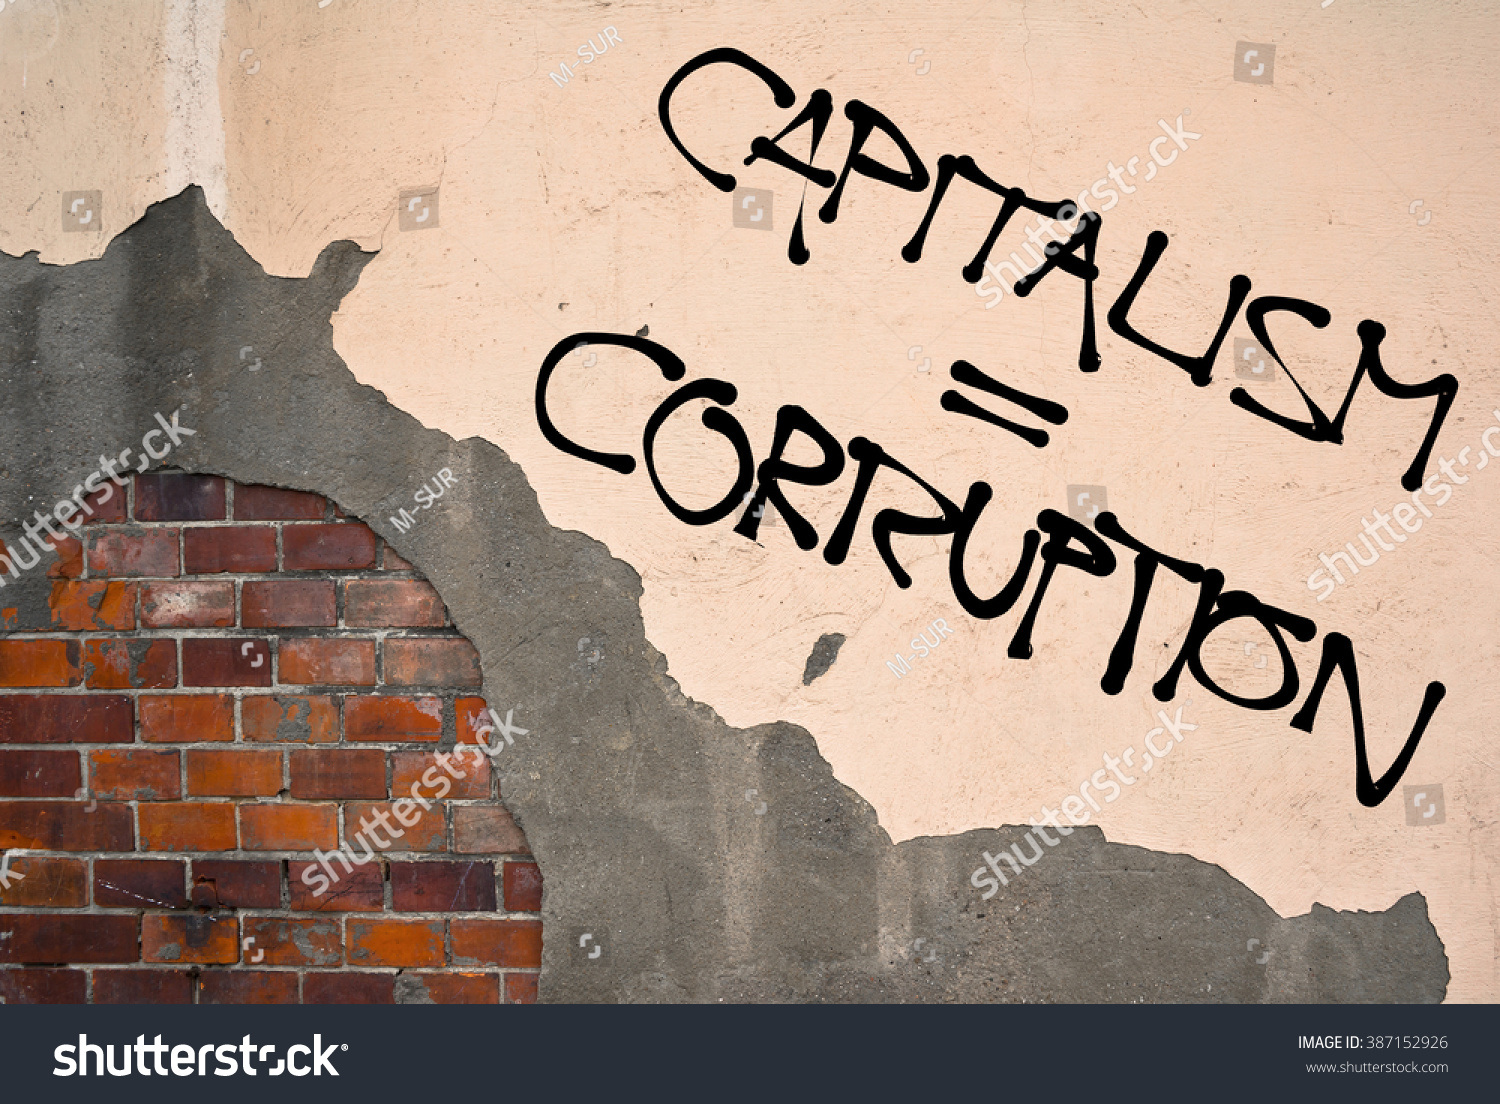 stock-photo-handwritten-graffiti-capitalism-is-corruption-sprayed-on-the-wall-anarchist-aesthetics-387152926.jpg